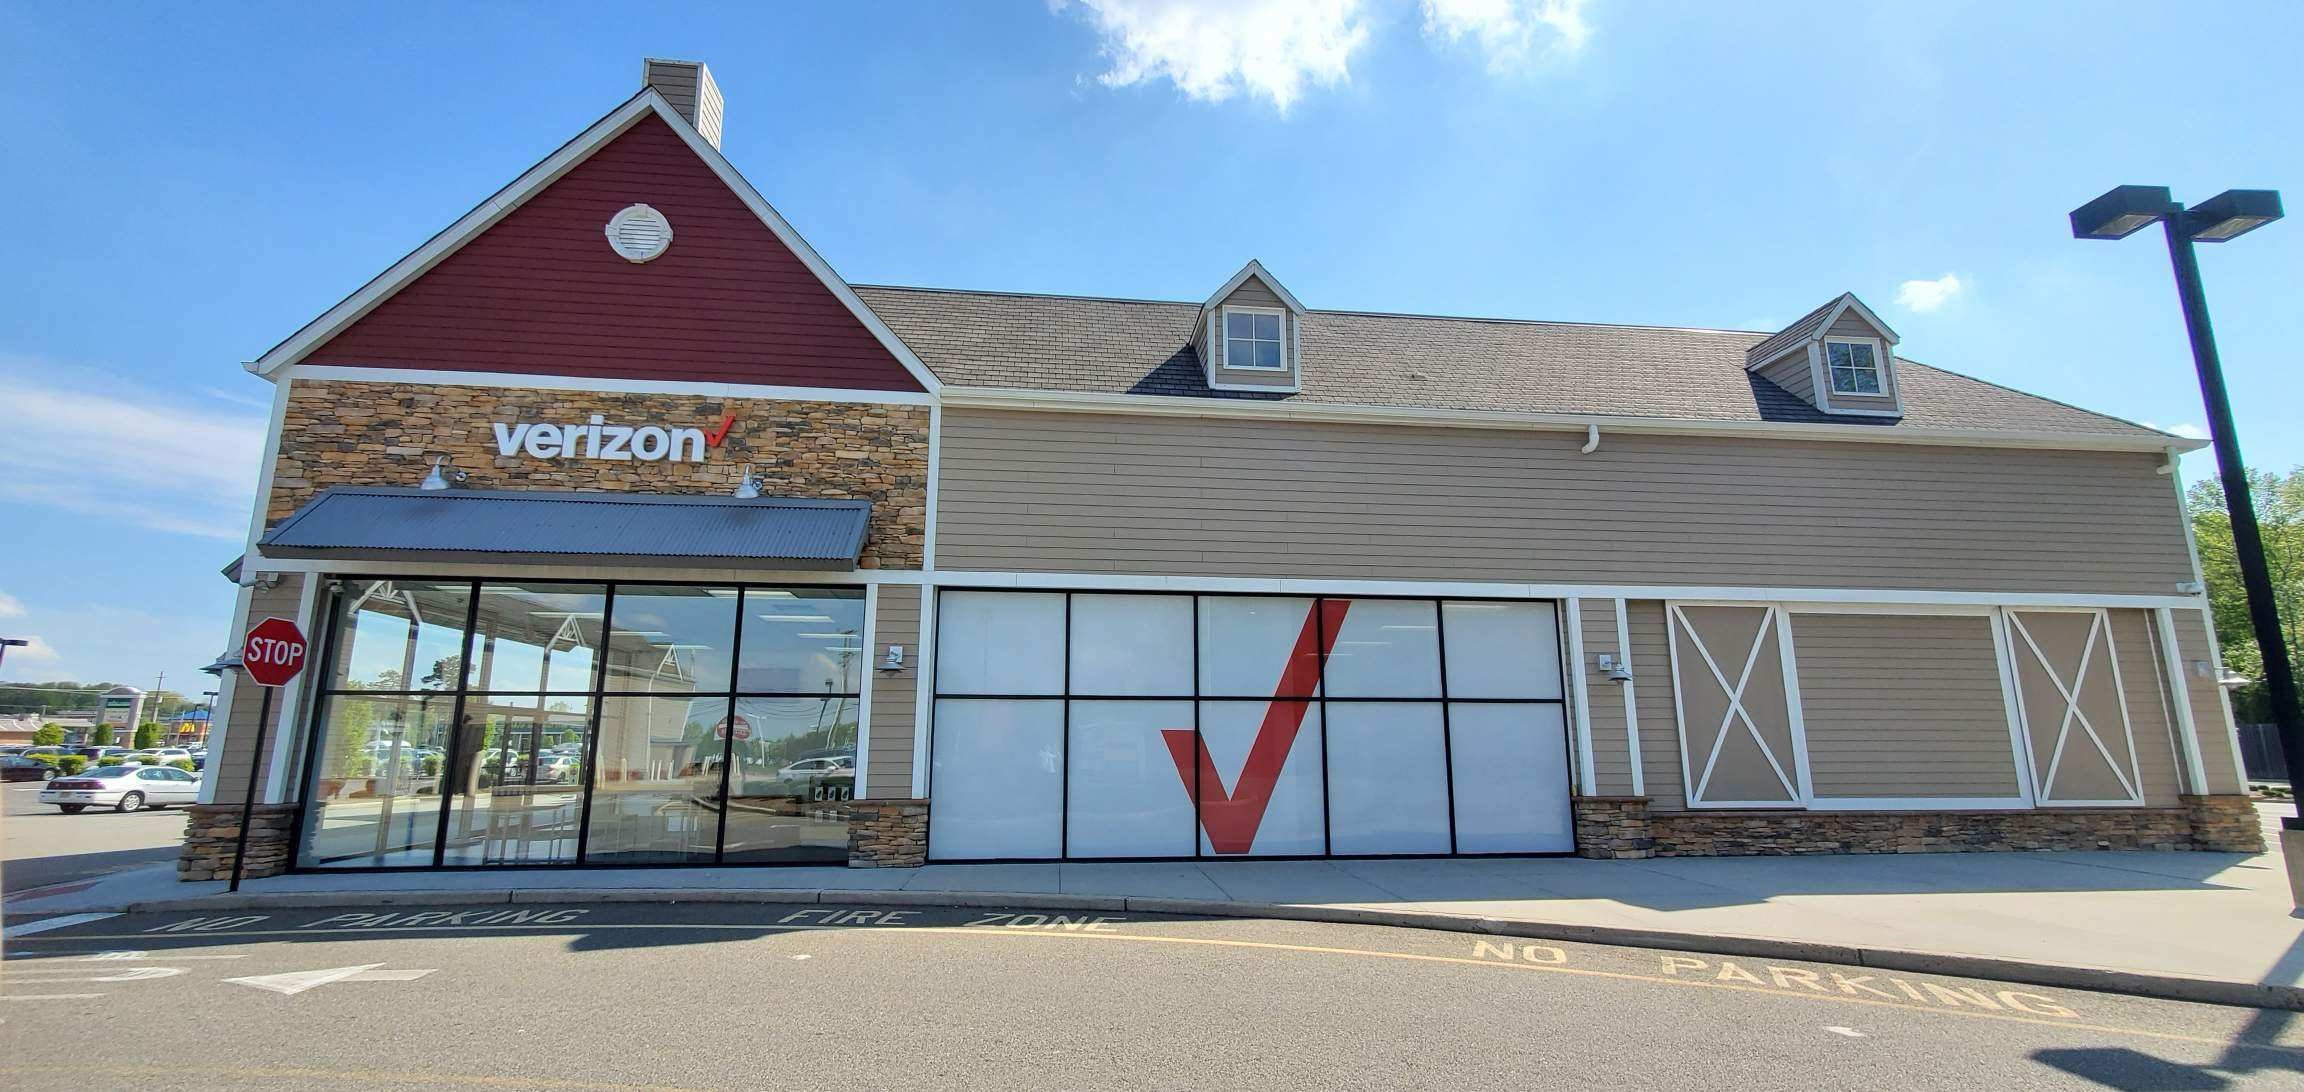 Wireless Zone®, Verizon Authorized Retailer
87 Route 9 South
In the Whole Foods Shopping Center
Marlboro, NJ